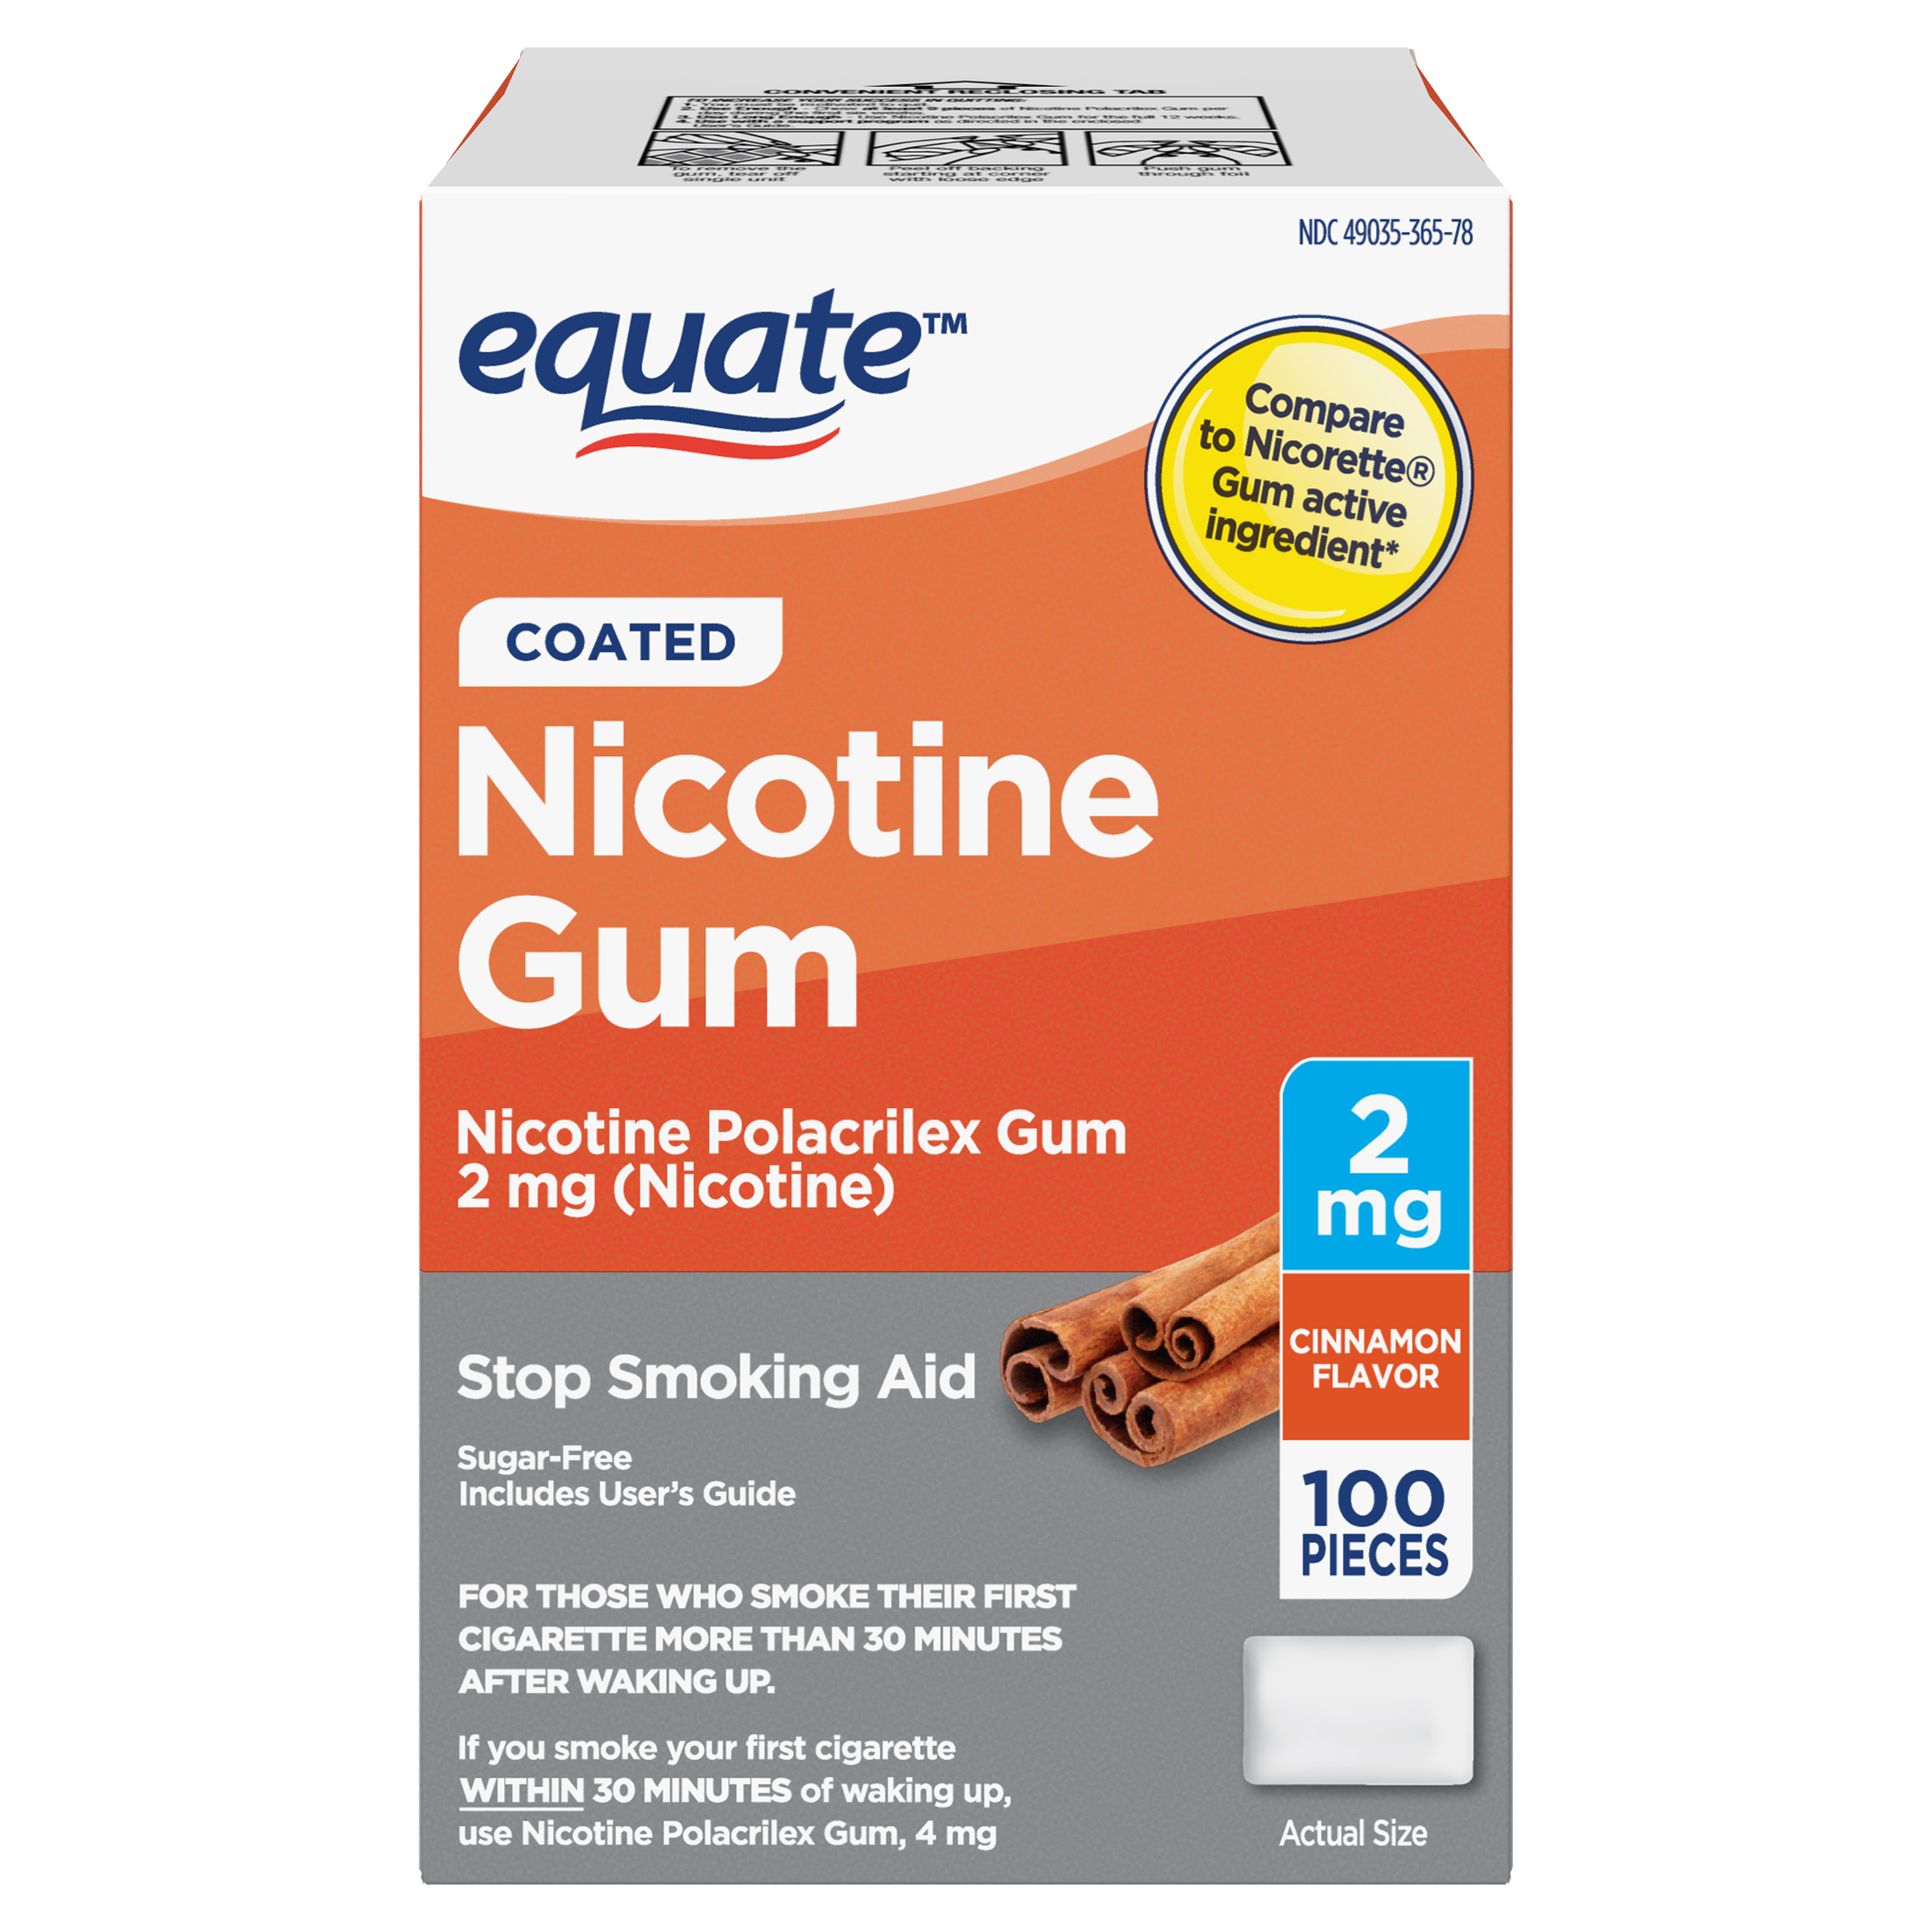 Equate Nicotine Coated Gum 2 mg, Stop Smoking Aid, Cinnamon Flavor, 100 Count - image 1 of 10